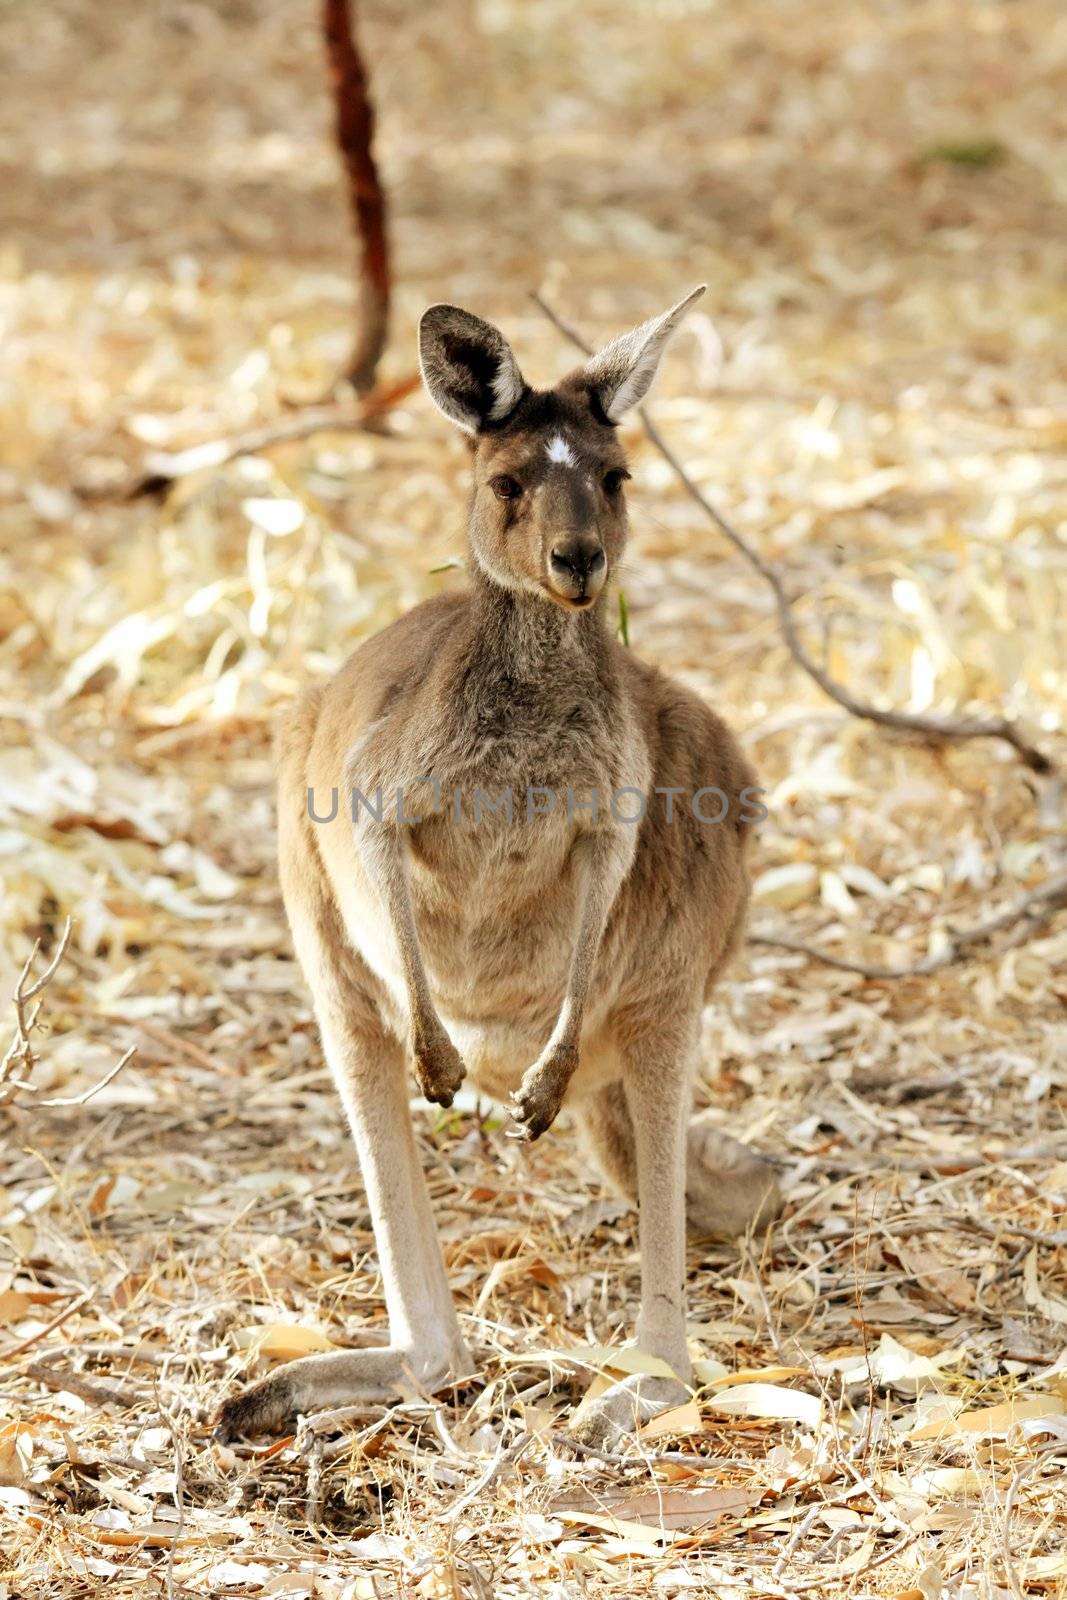 Cute Young Kangaroo by kentoh